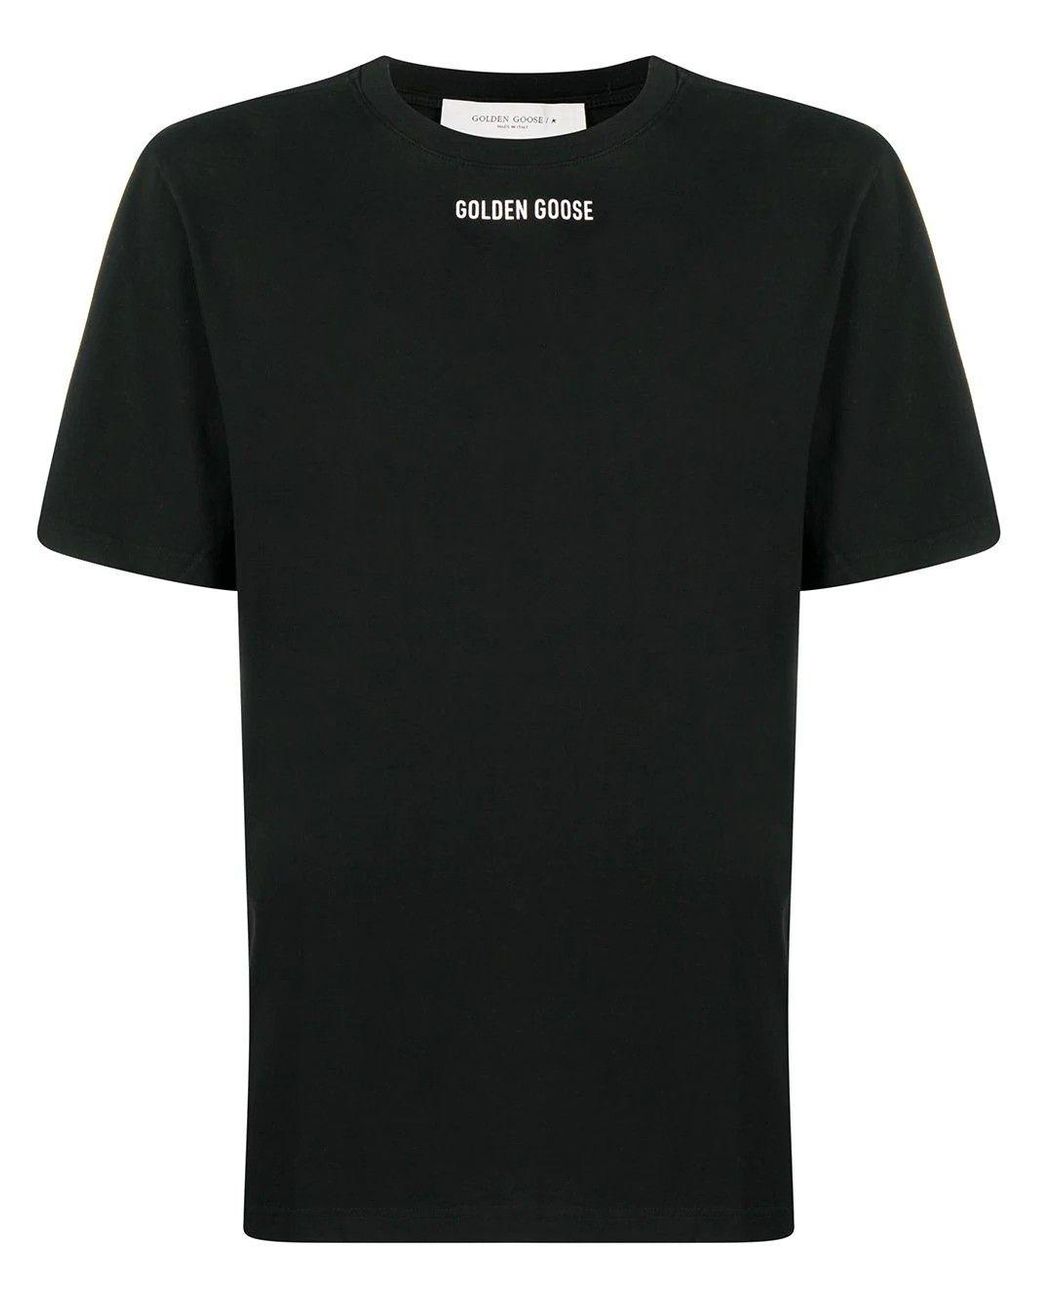 Golden Goose Deluxe Brand Cotton T-shirt in Black for Men - Lyst